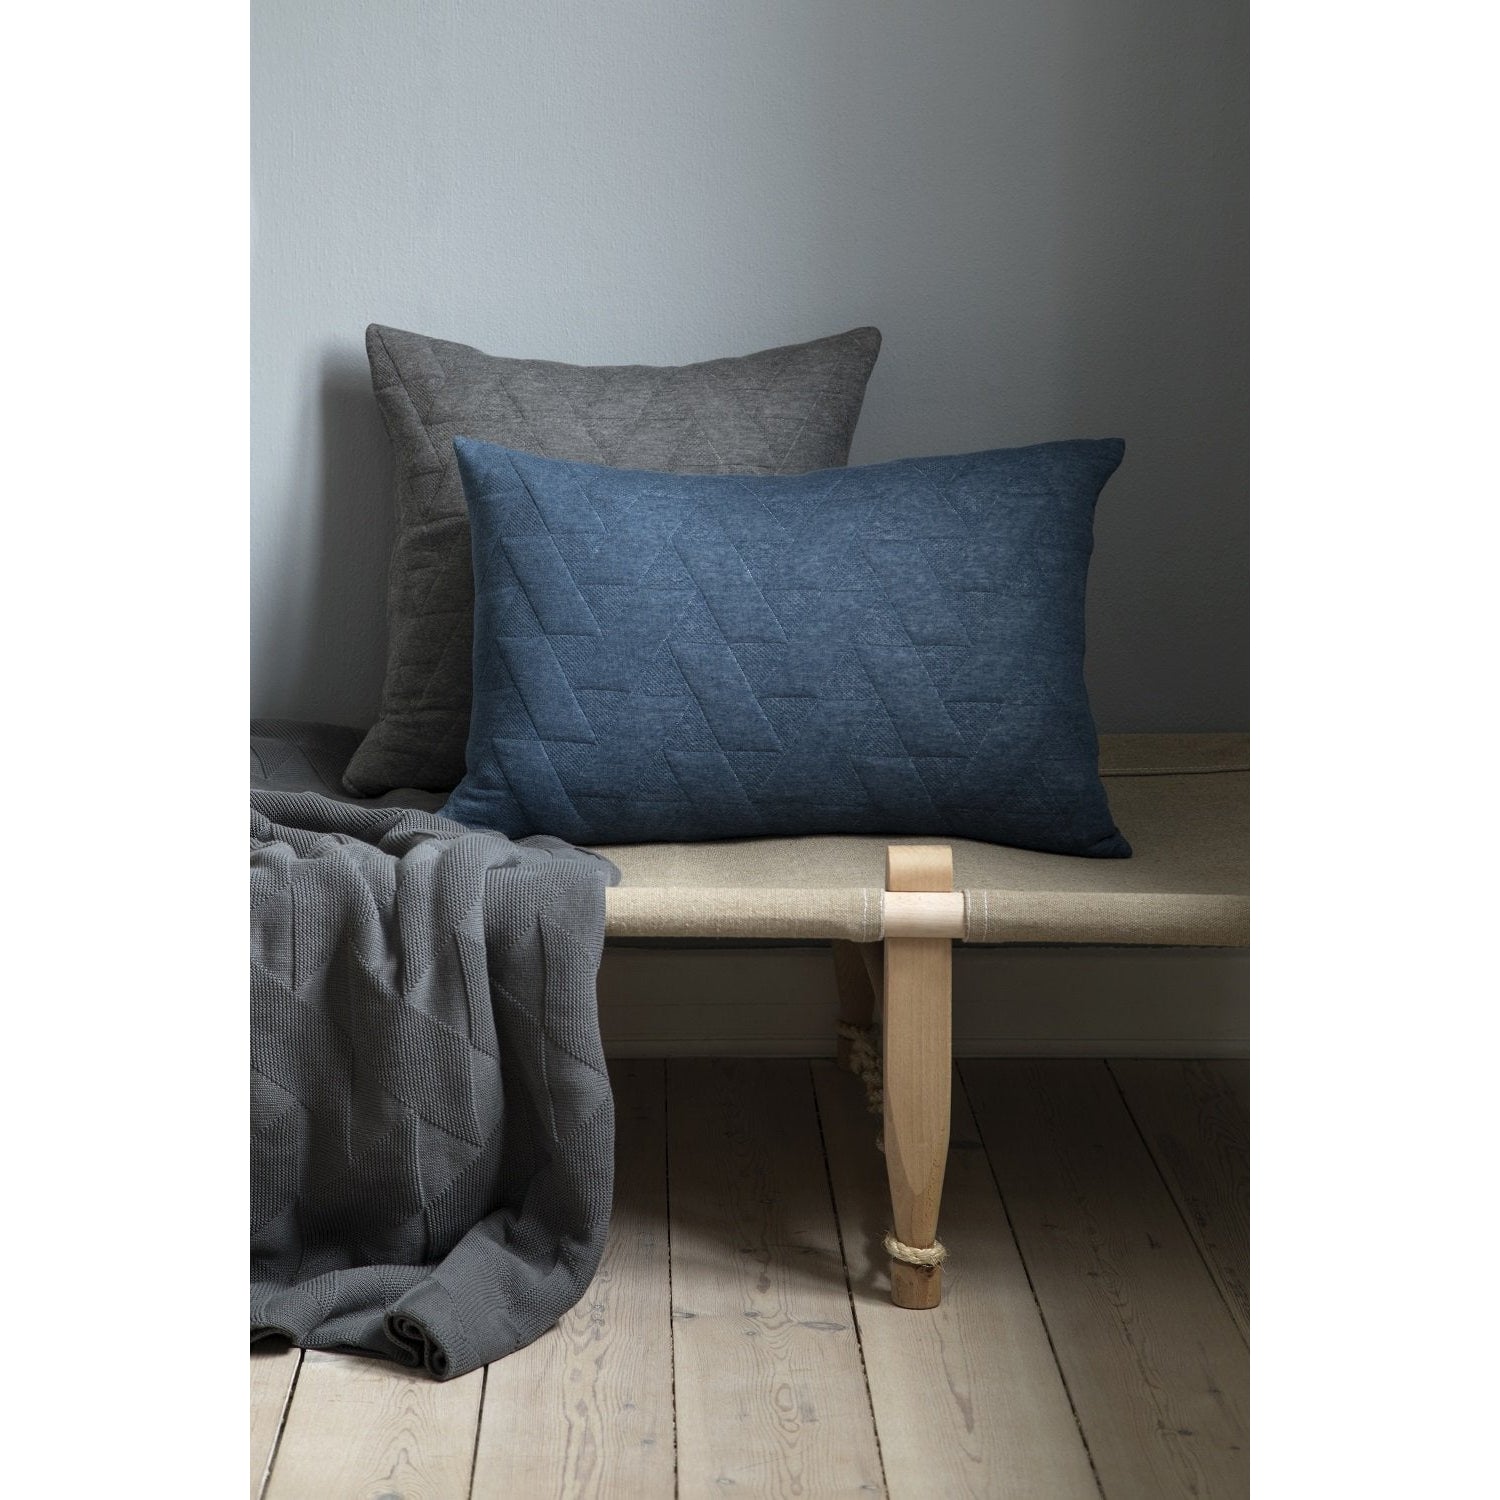 Architectmade Finn Juhl Pattern Cushion, Gray 40x60